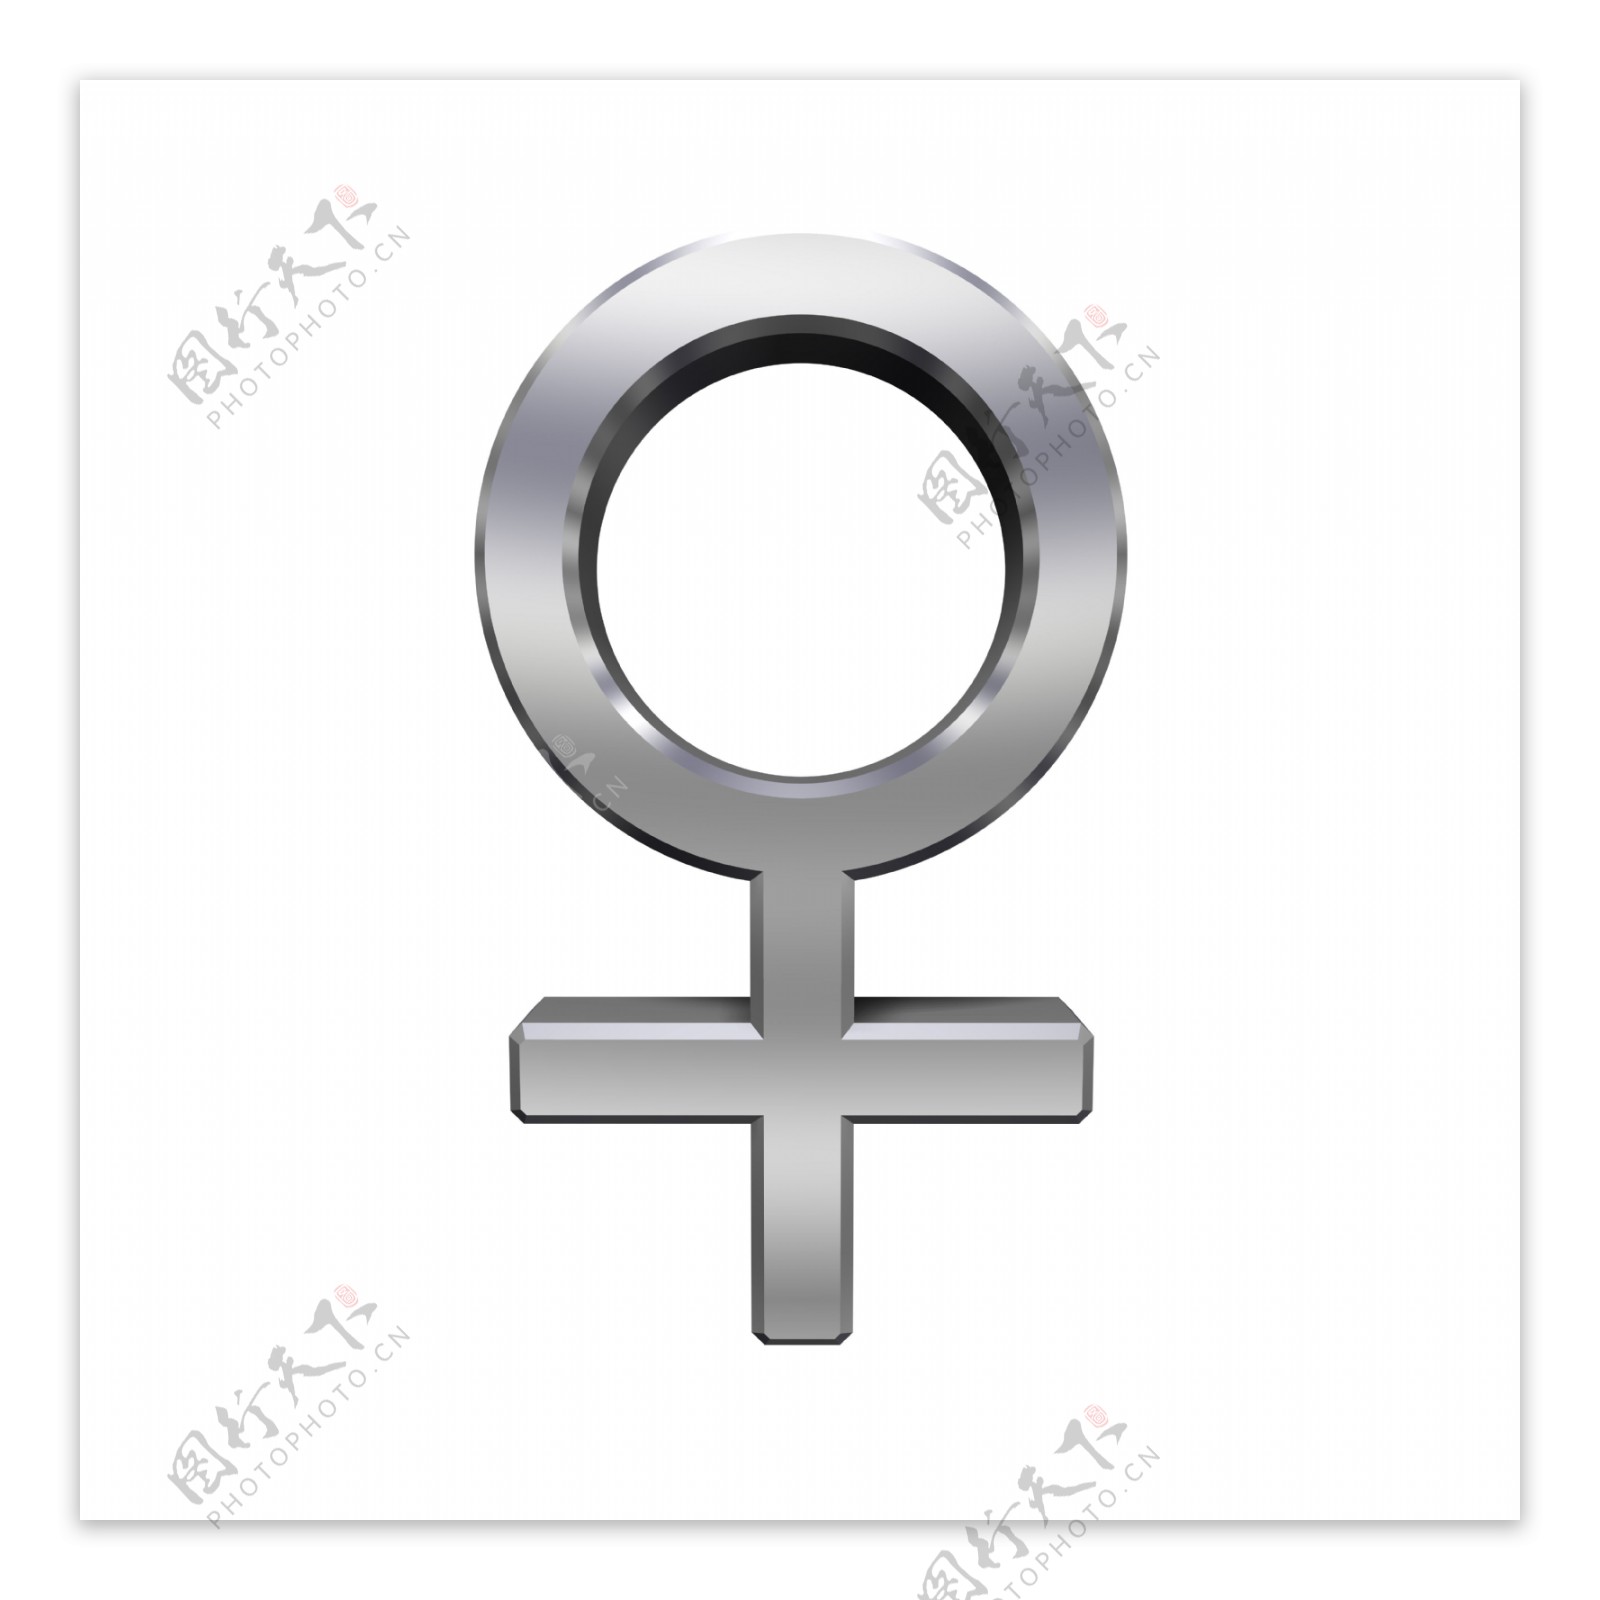 Chrome的女性性别符号